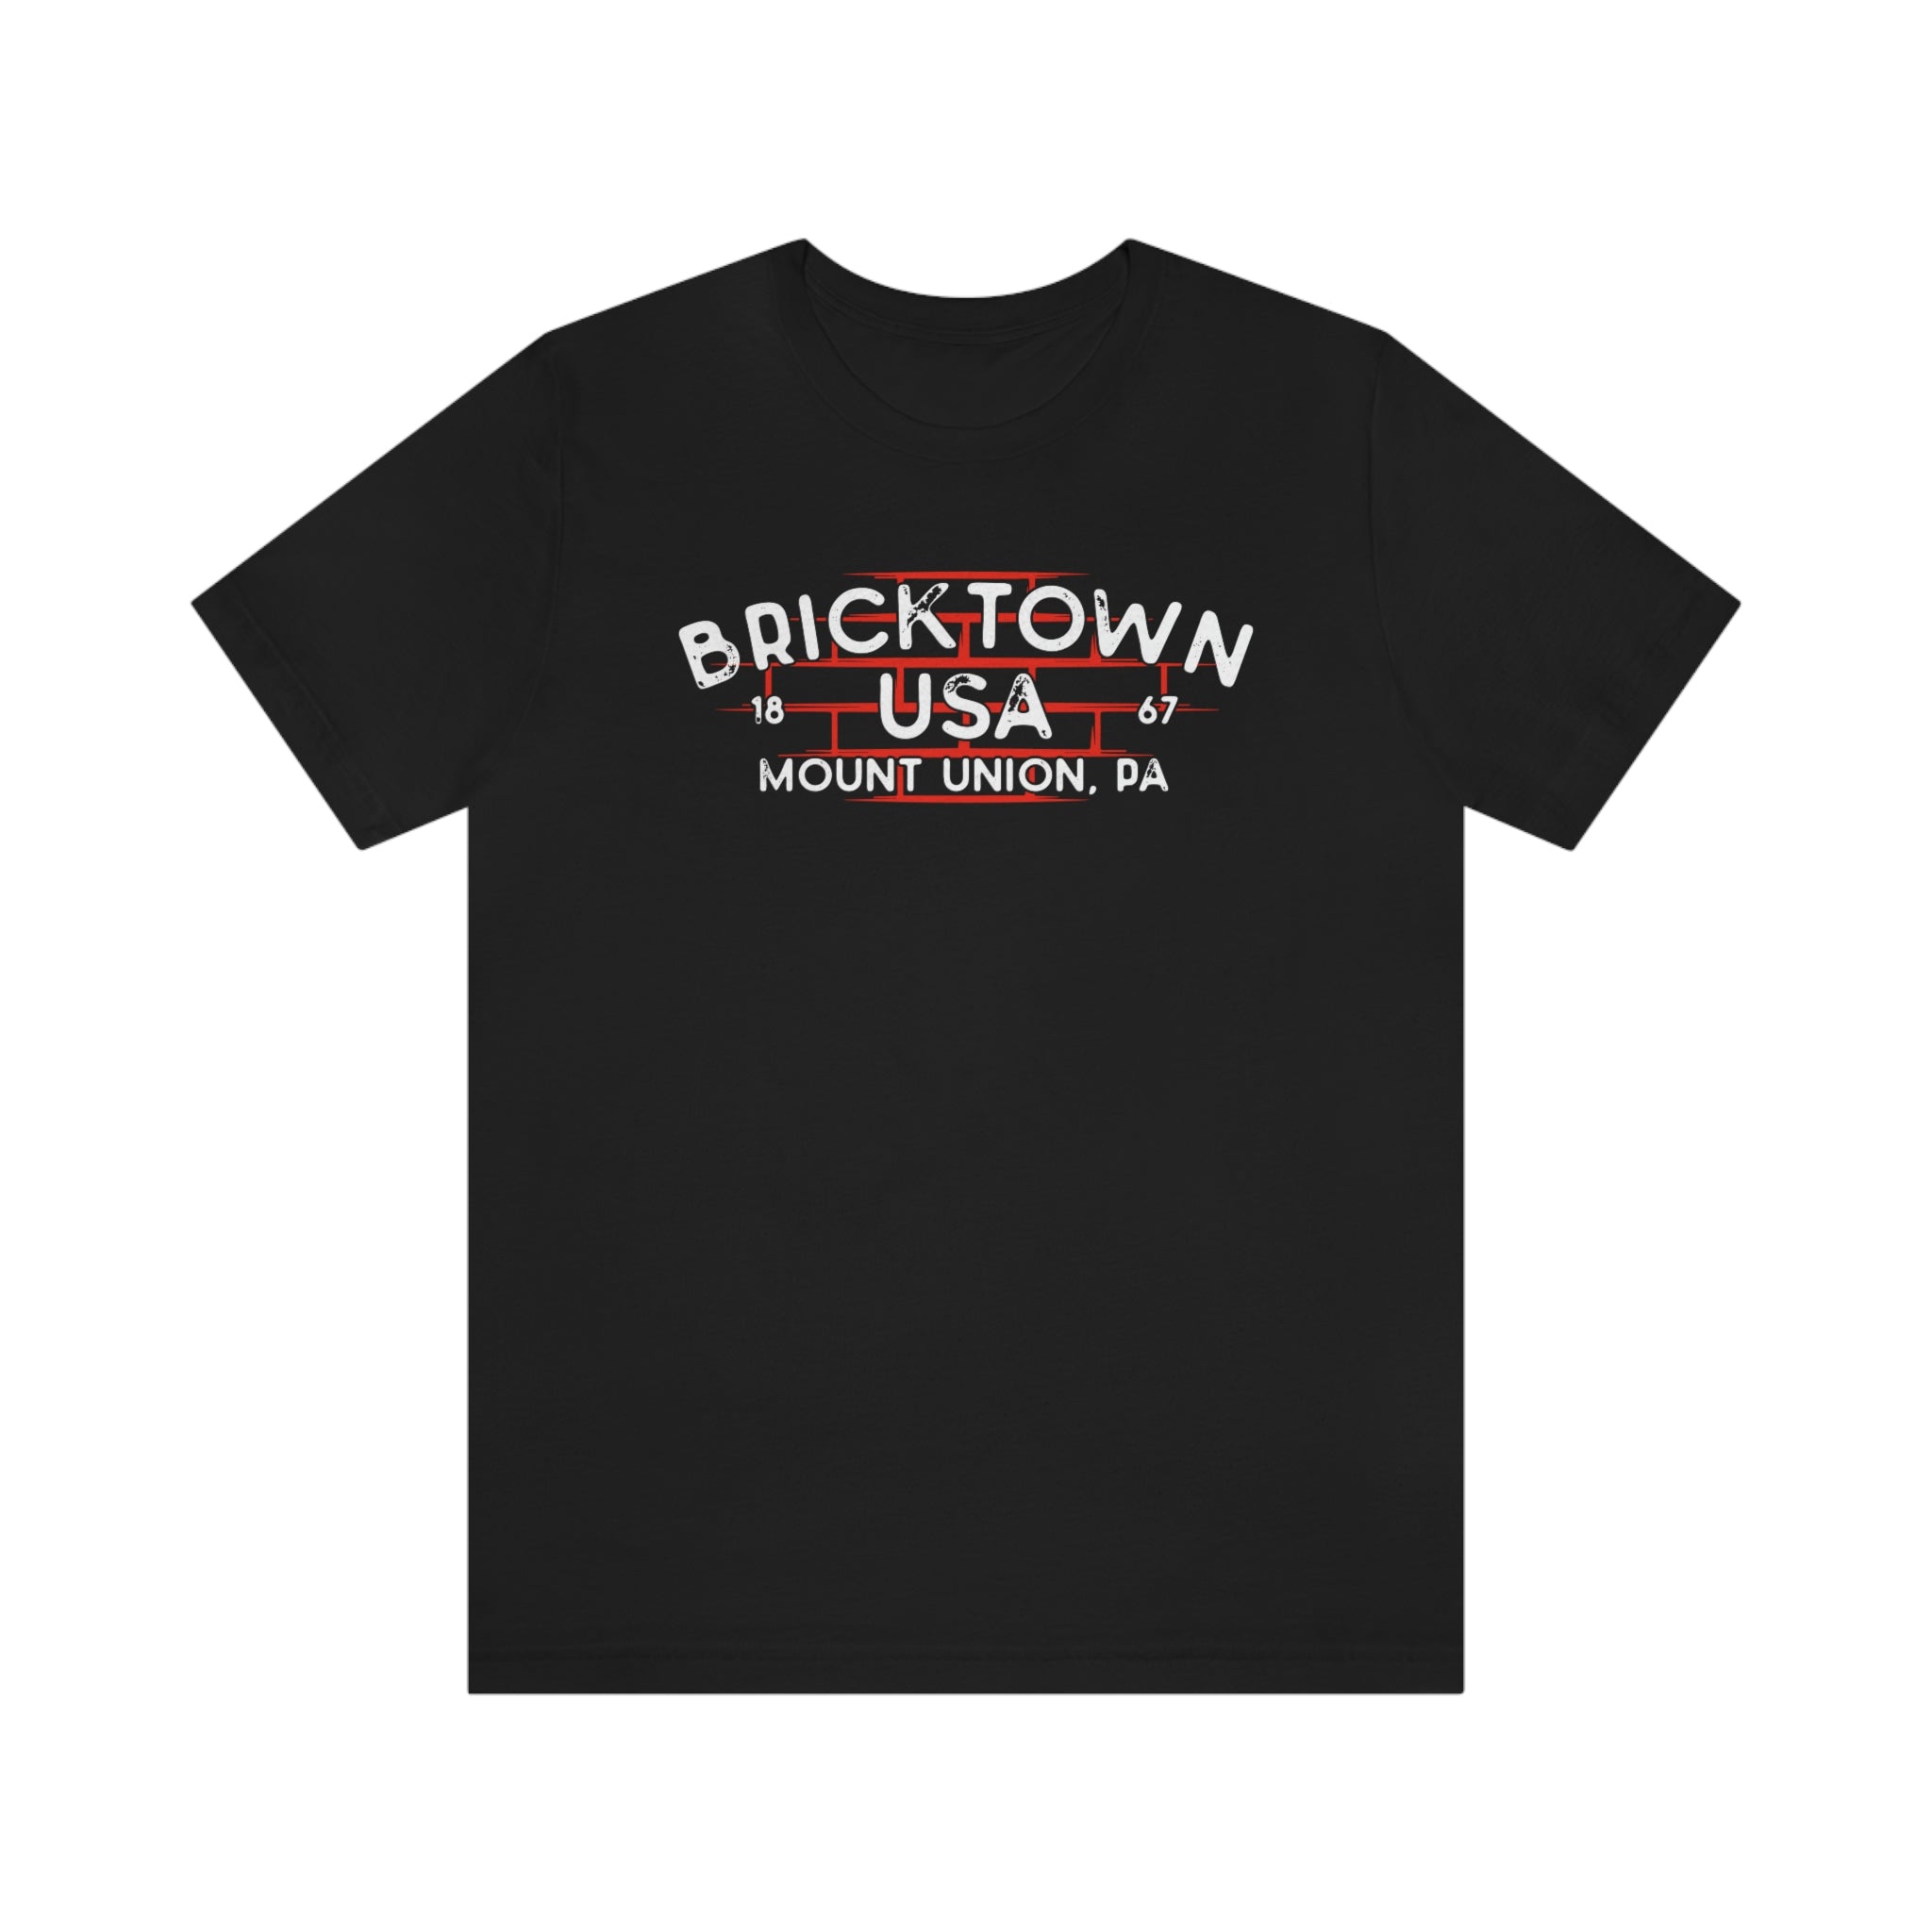 Bricktown, USA - Mount Union, PA - Yinzylvania